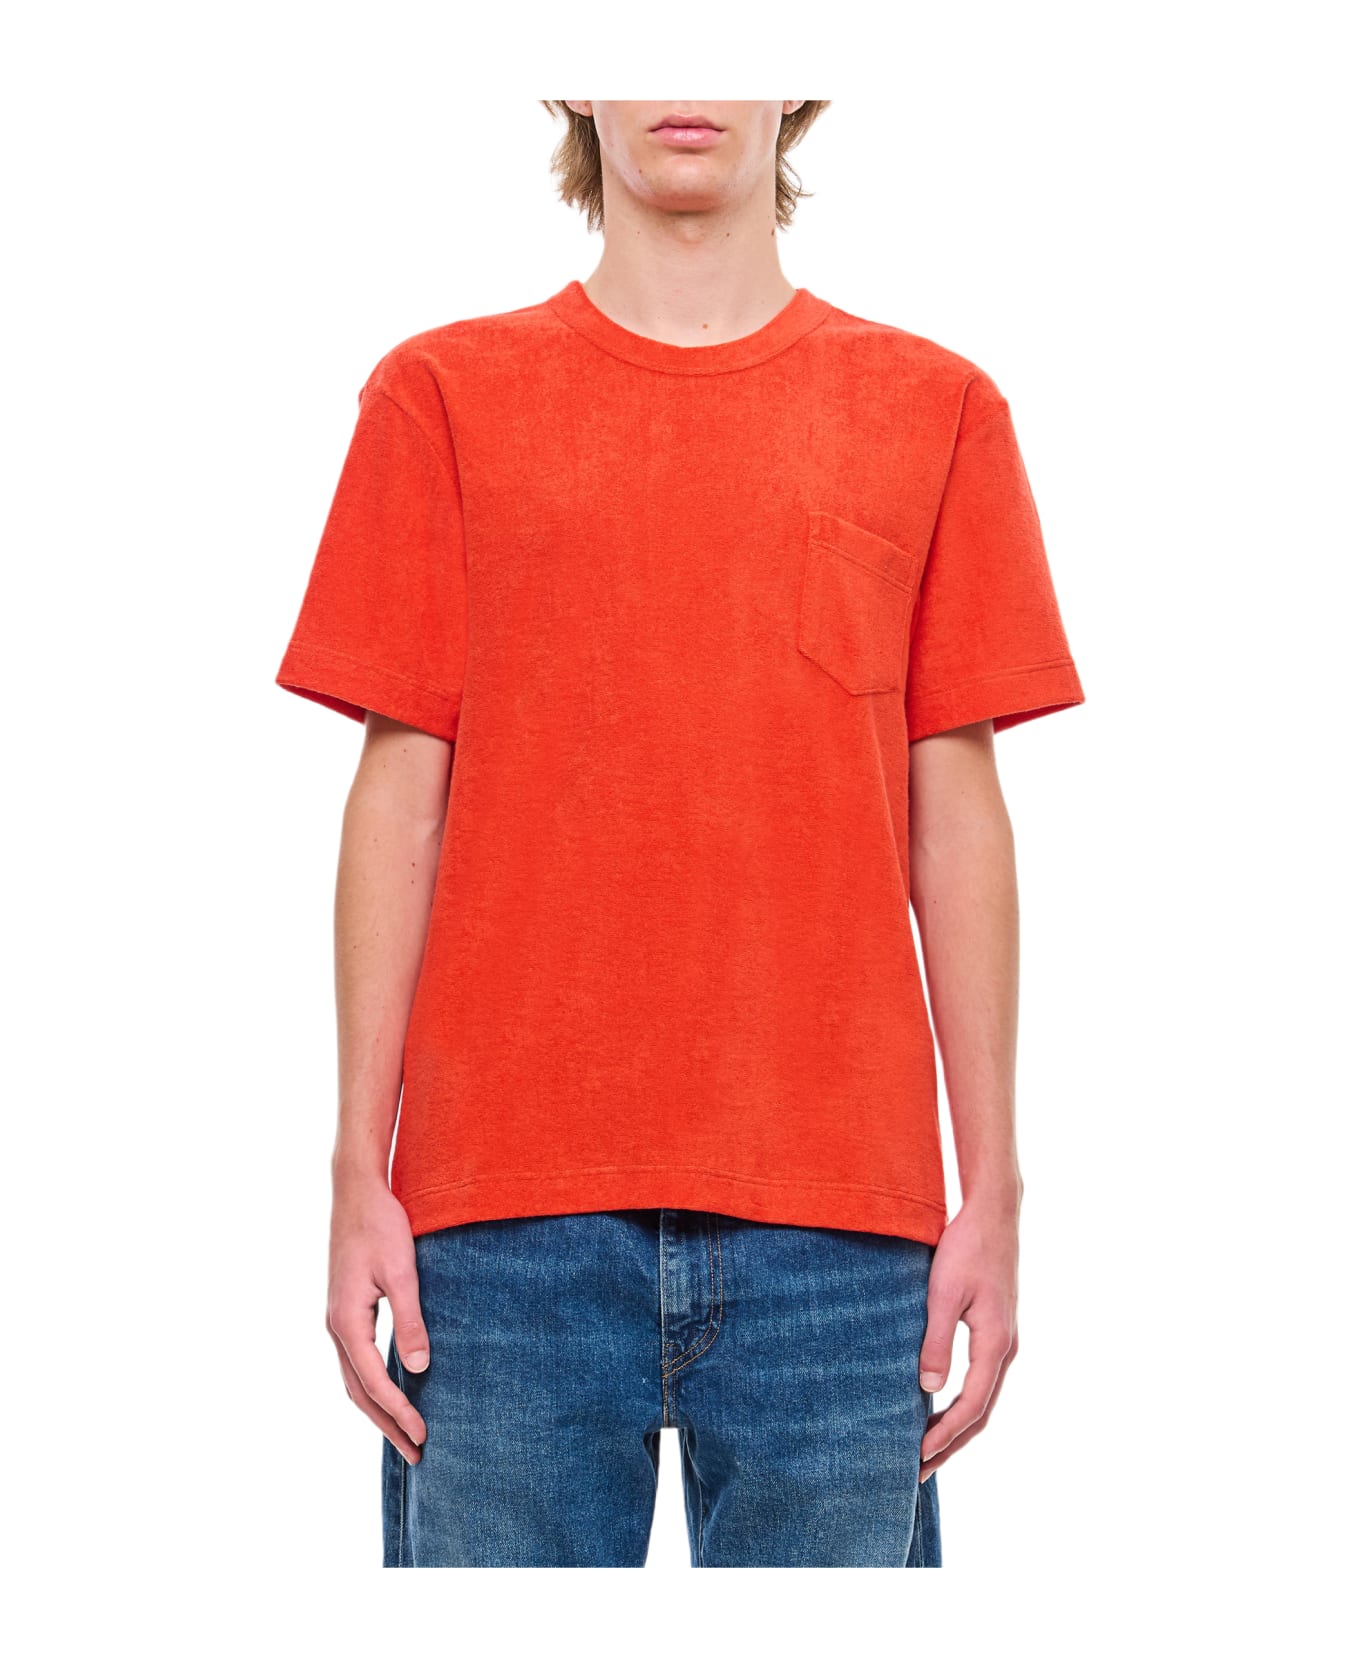 Howlin Shortsleeve Terry T-shirt - Red